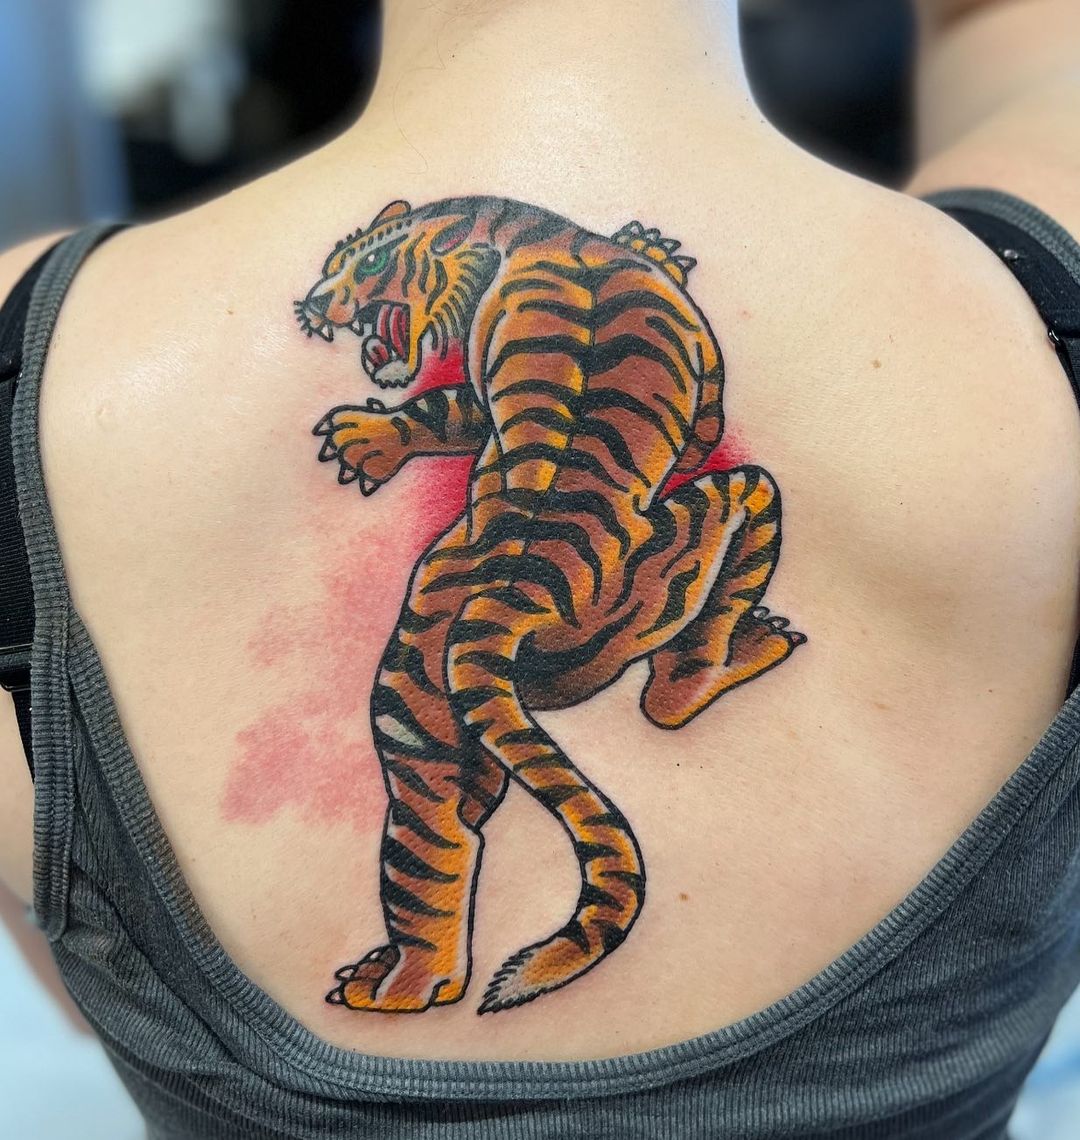 crawling-tiger-traditional-tattoo-mando-rascon